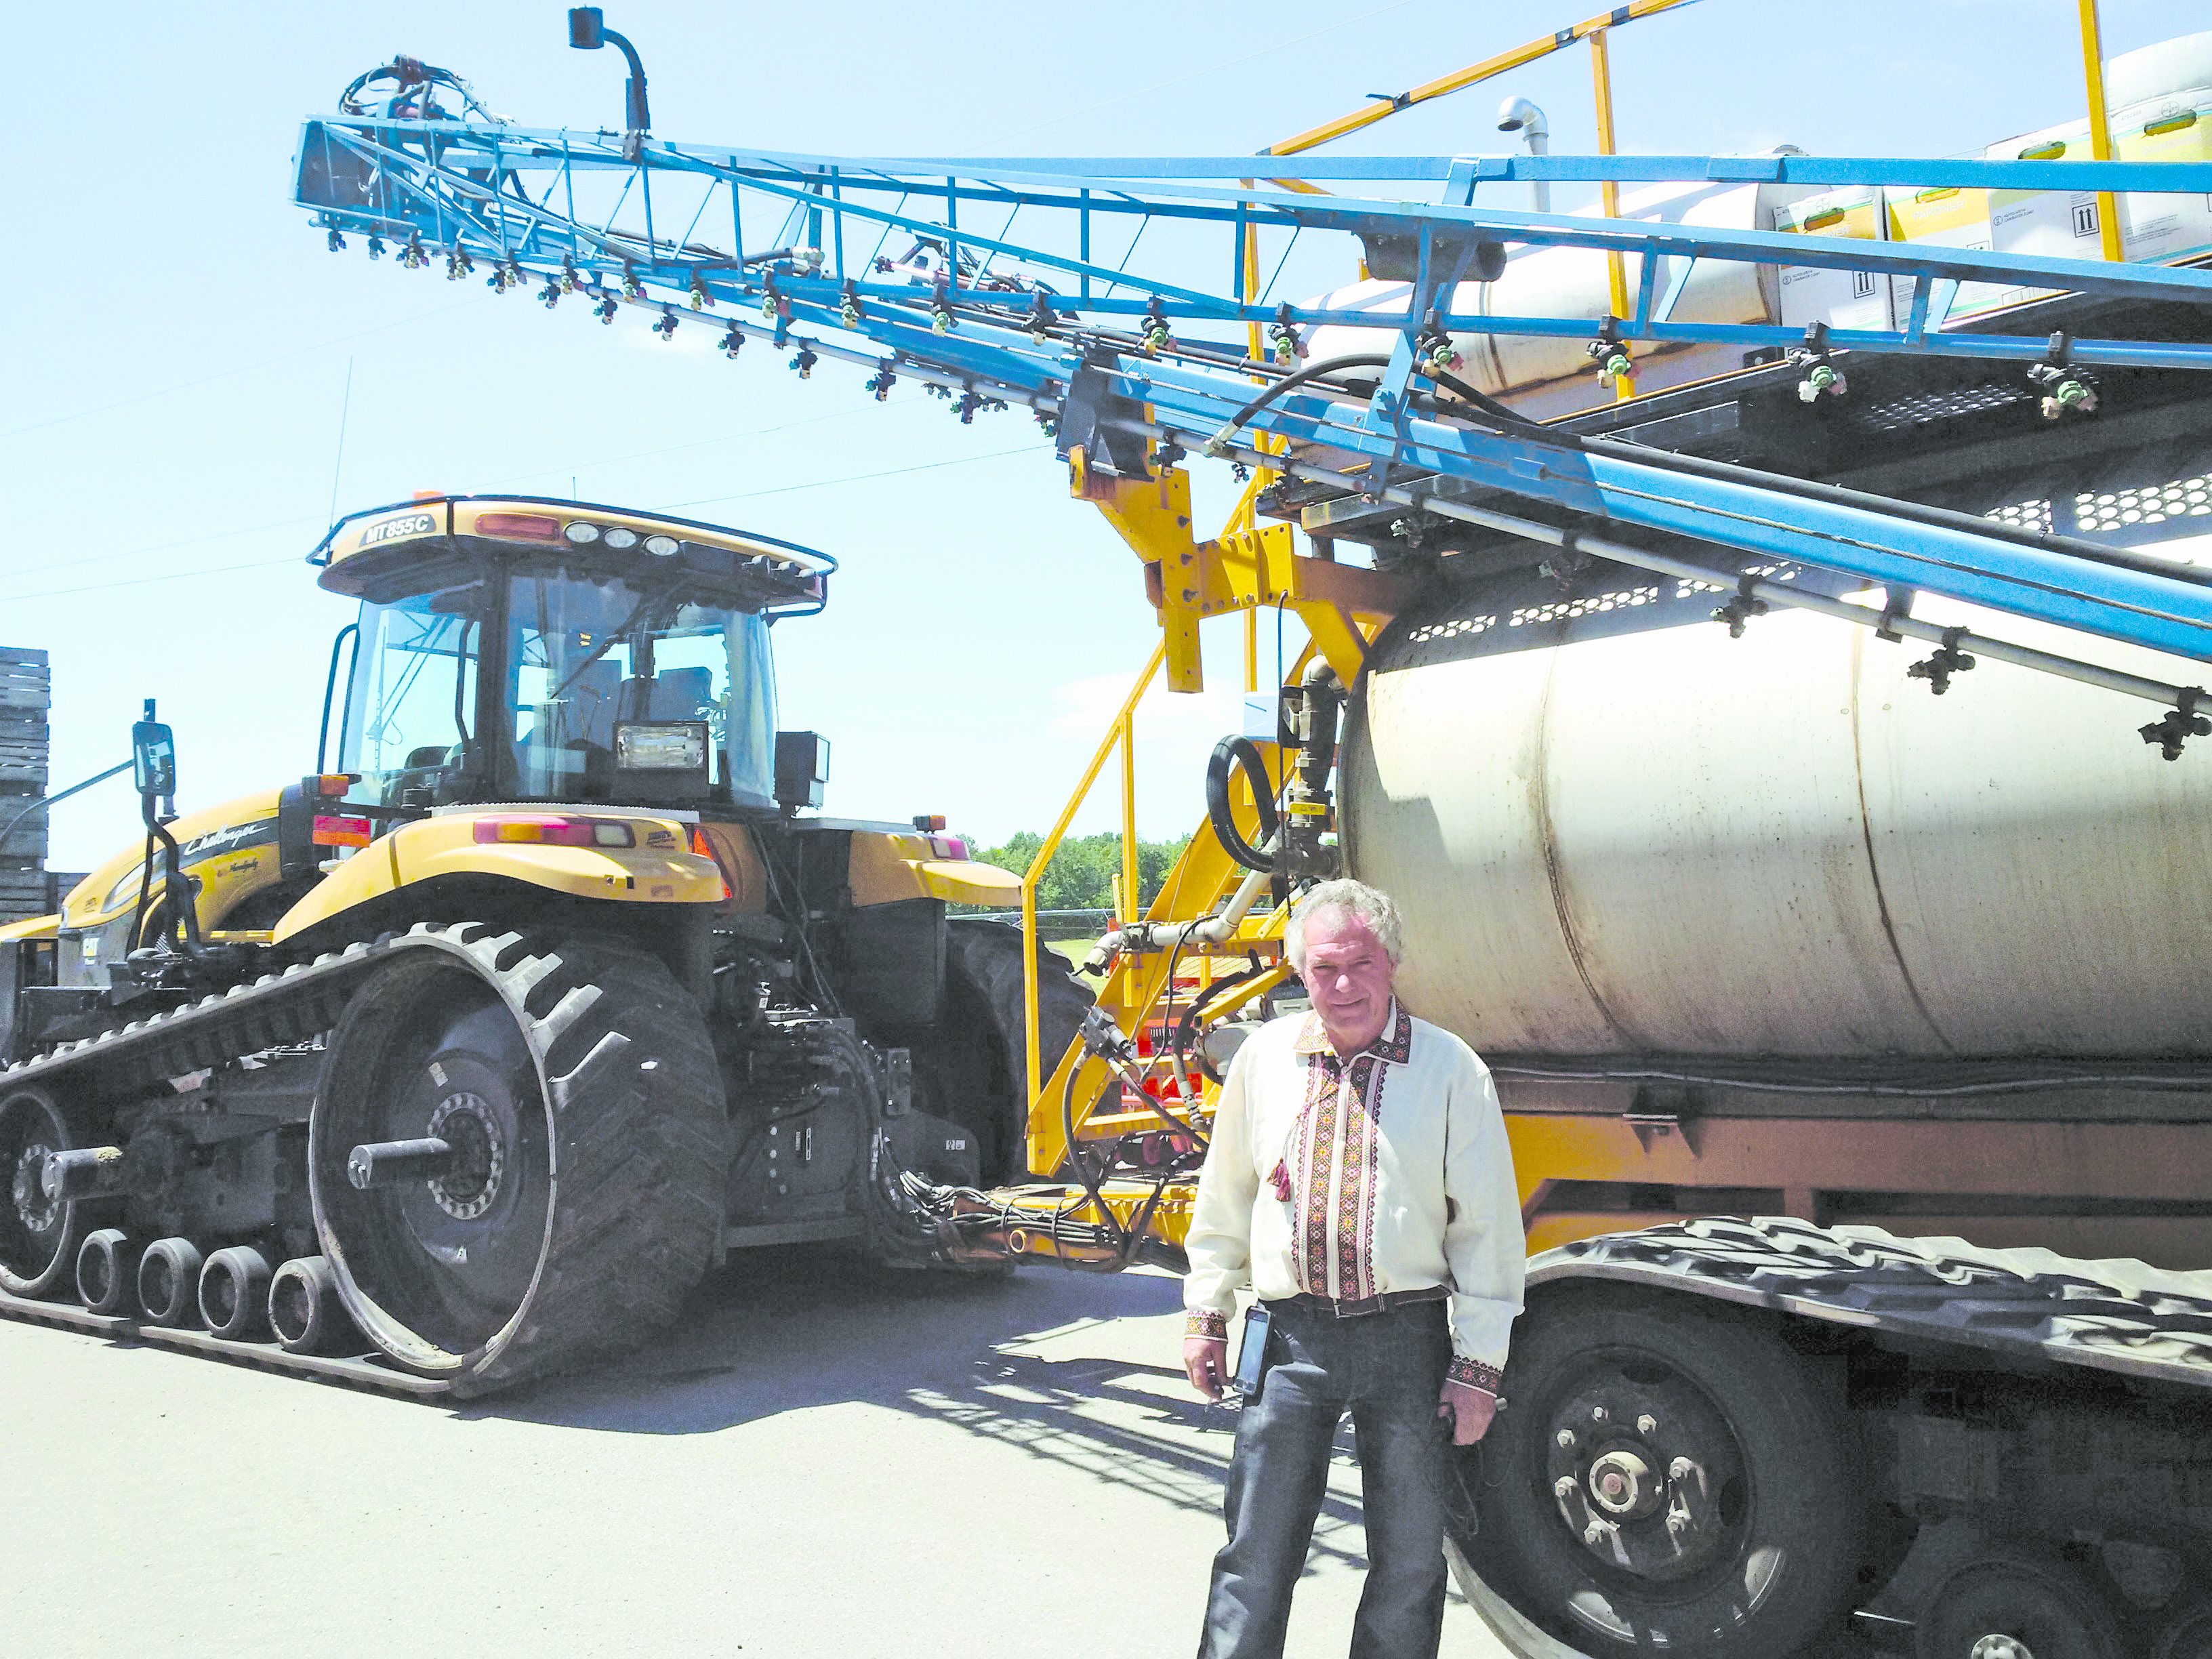 Borys Horodynsky in front of the 3,000-gallon sprayer